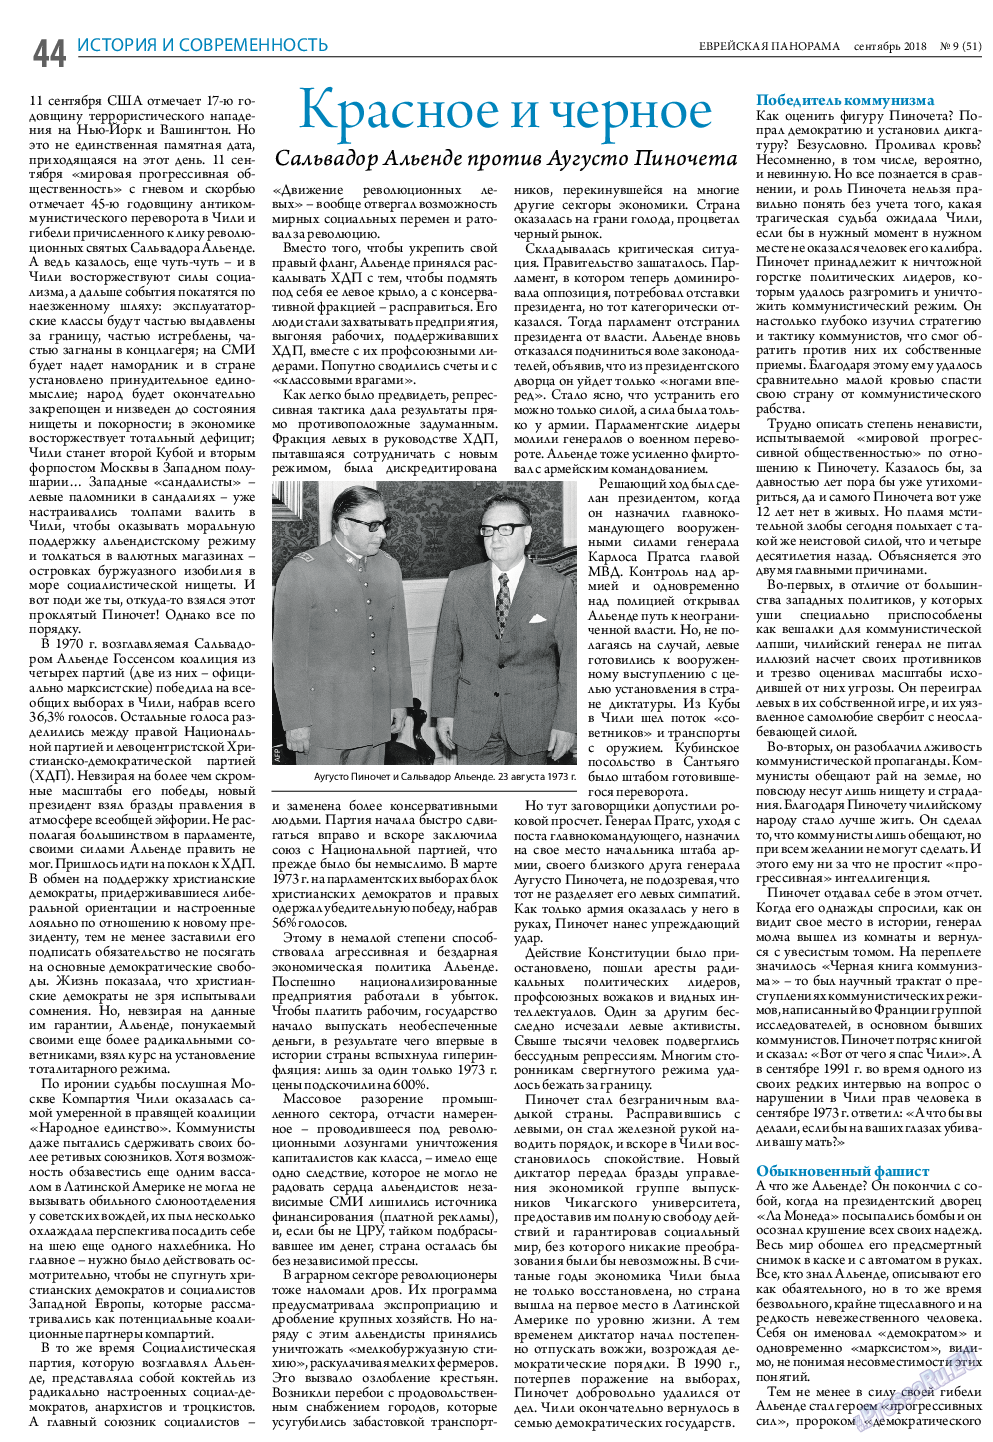 Еврейская панорама, газета. 2018 №9 стр.44